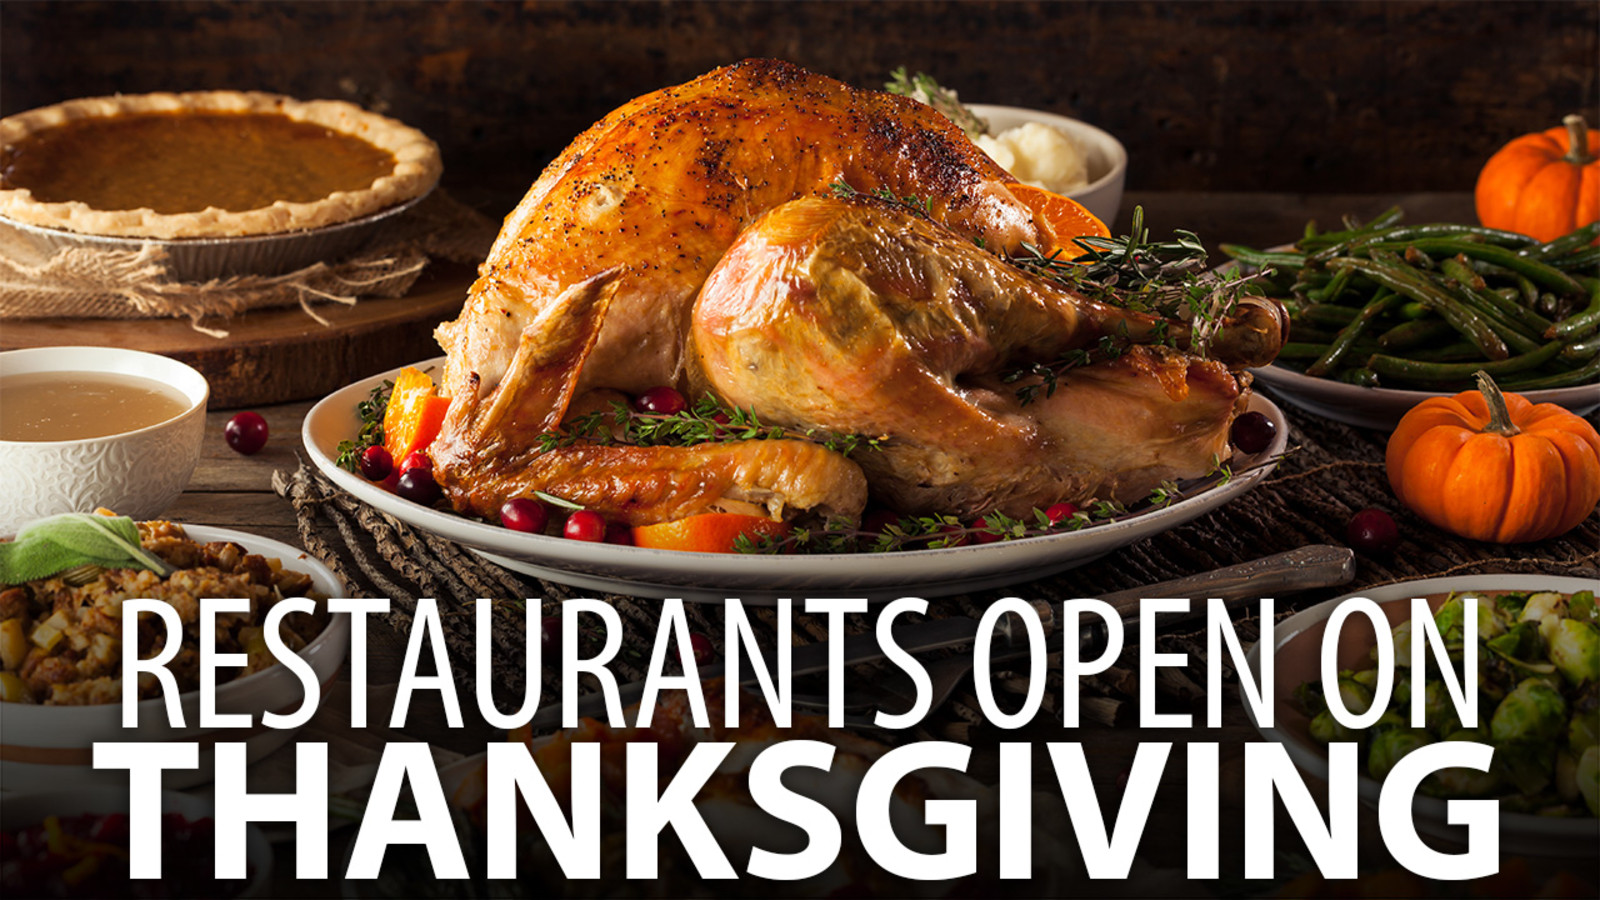 Fast Food Restaurants Open On Thanksgiving
 What restaurants are open on Thanksgiving Day